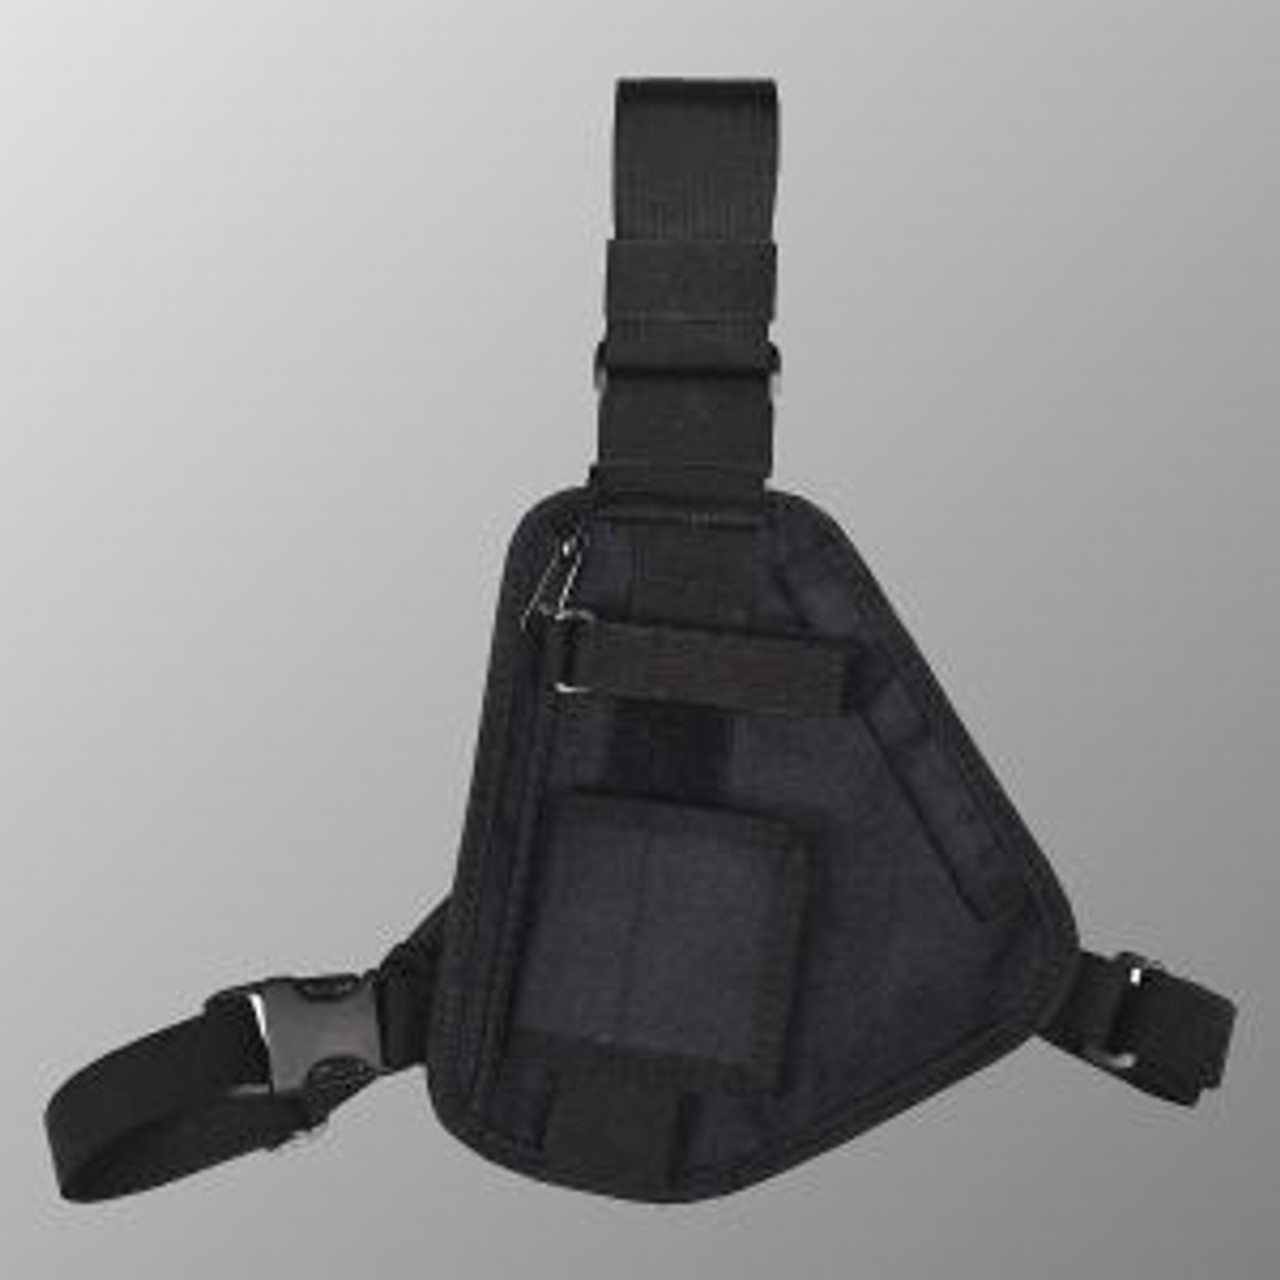 Motorola PTX780 3-Point Chest Harness - Black